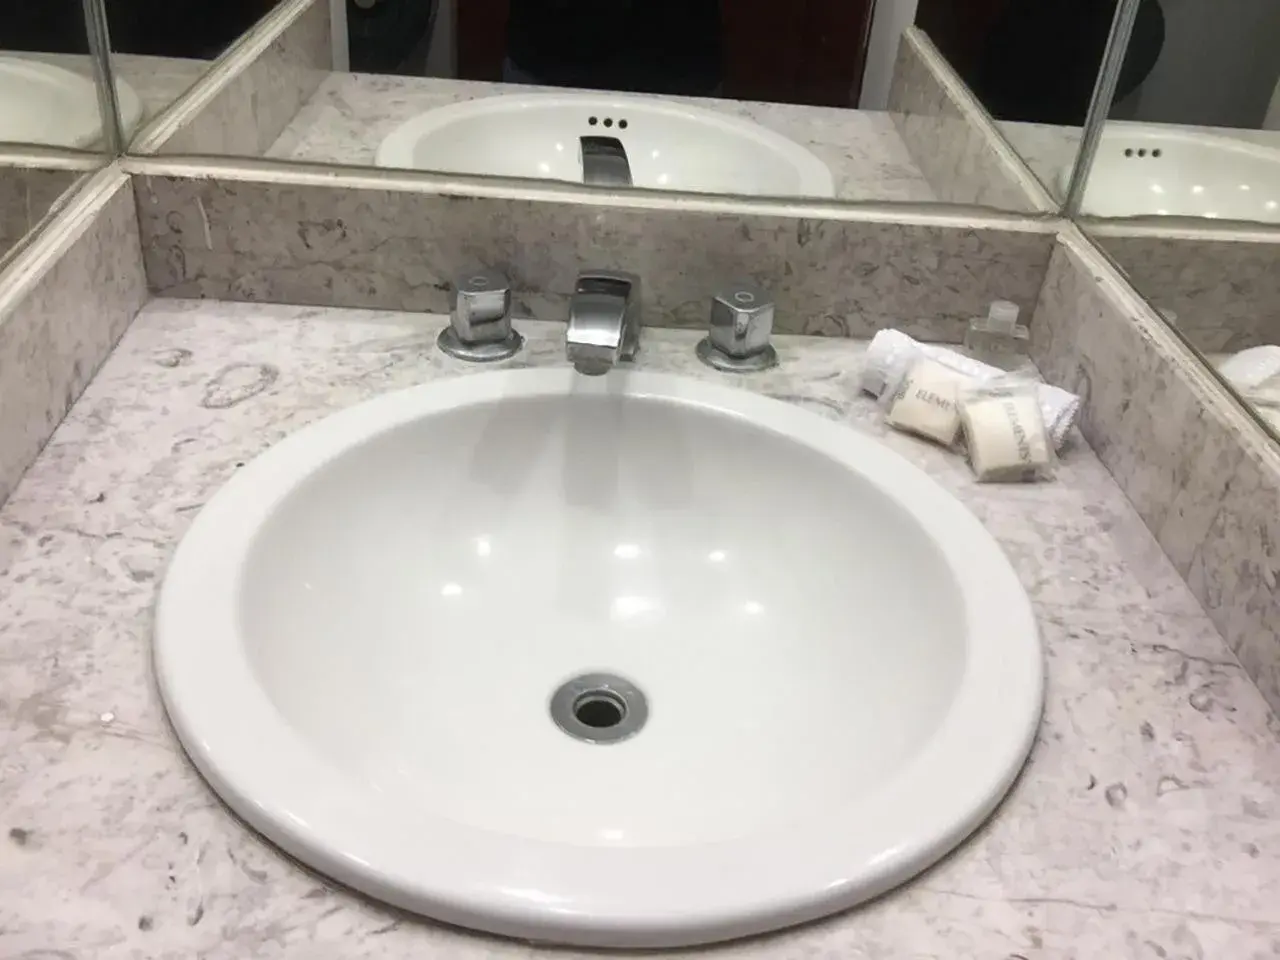 Bathroom in Hotel Rivera